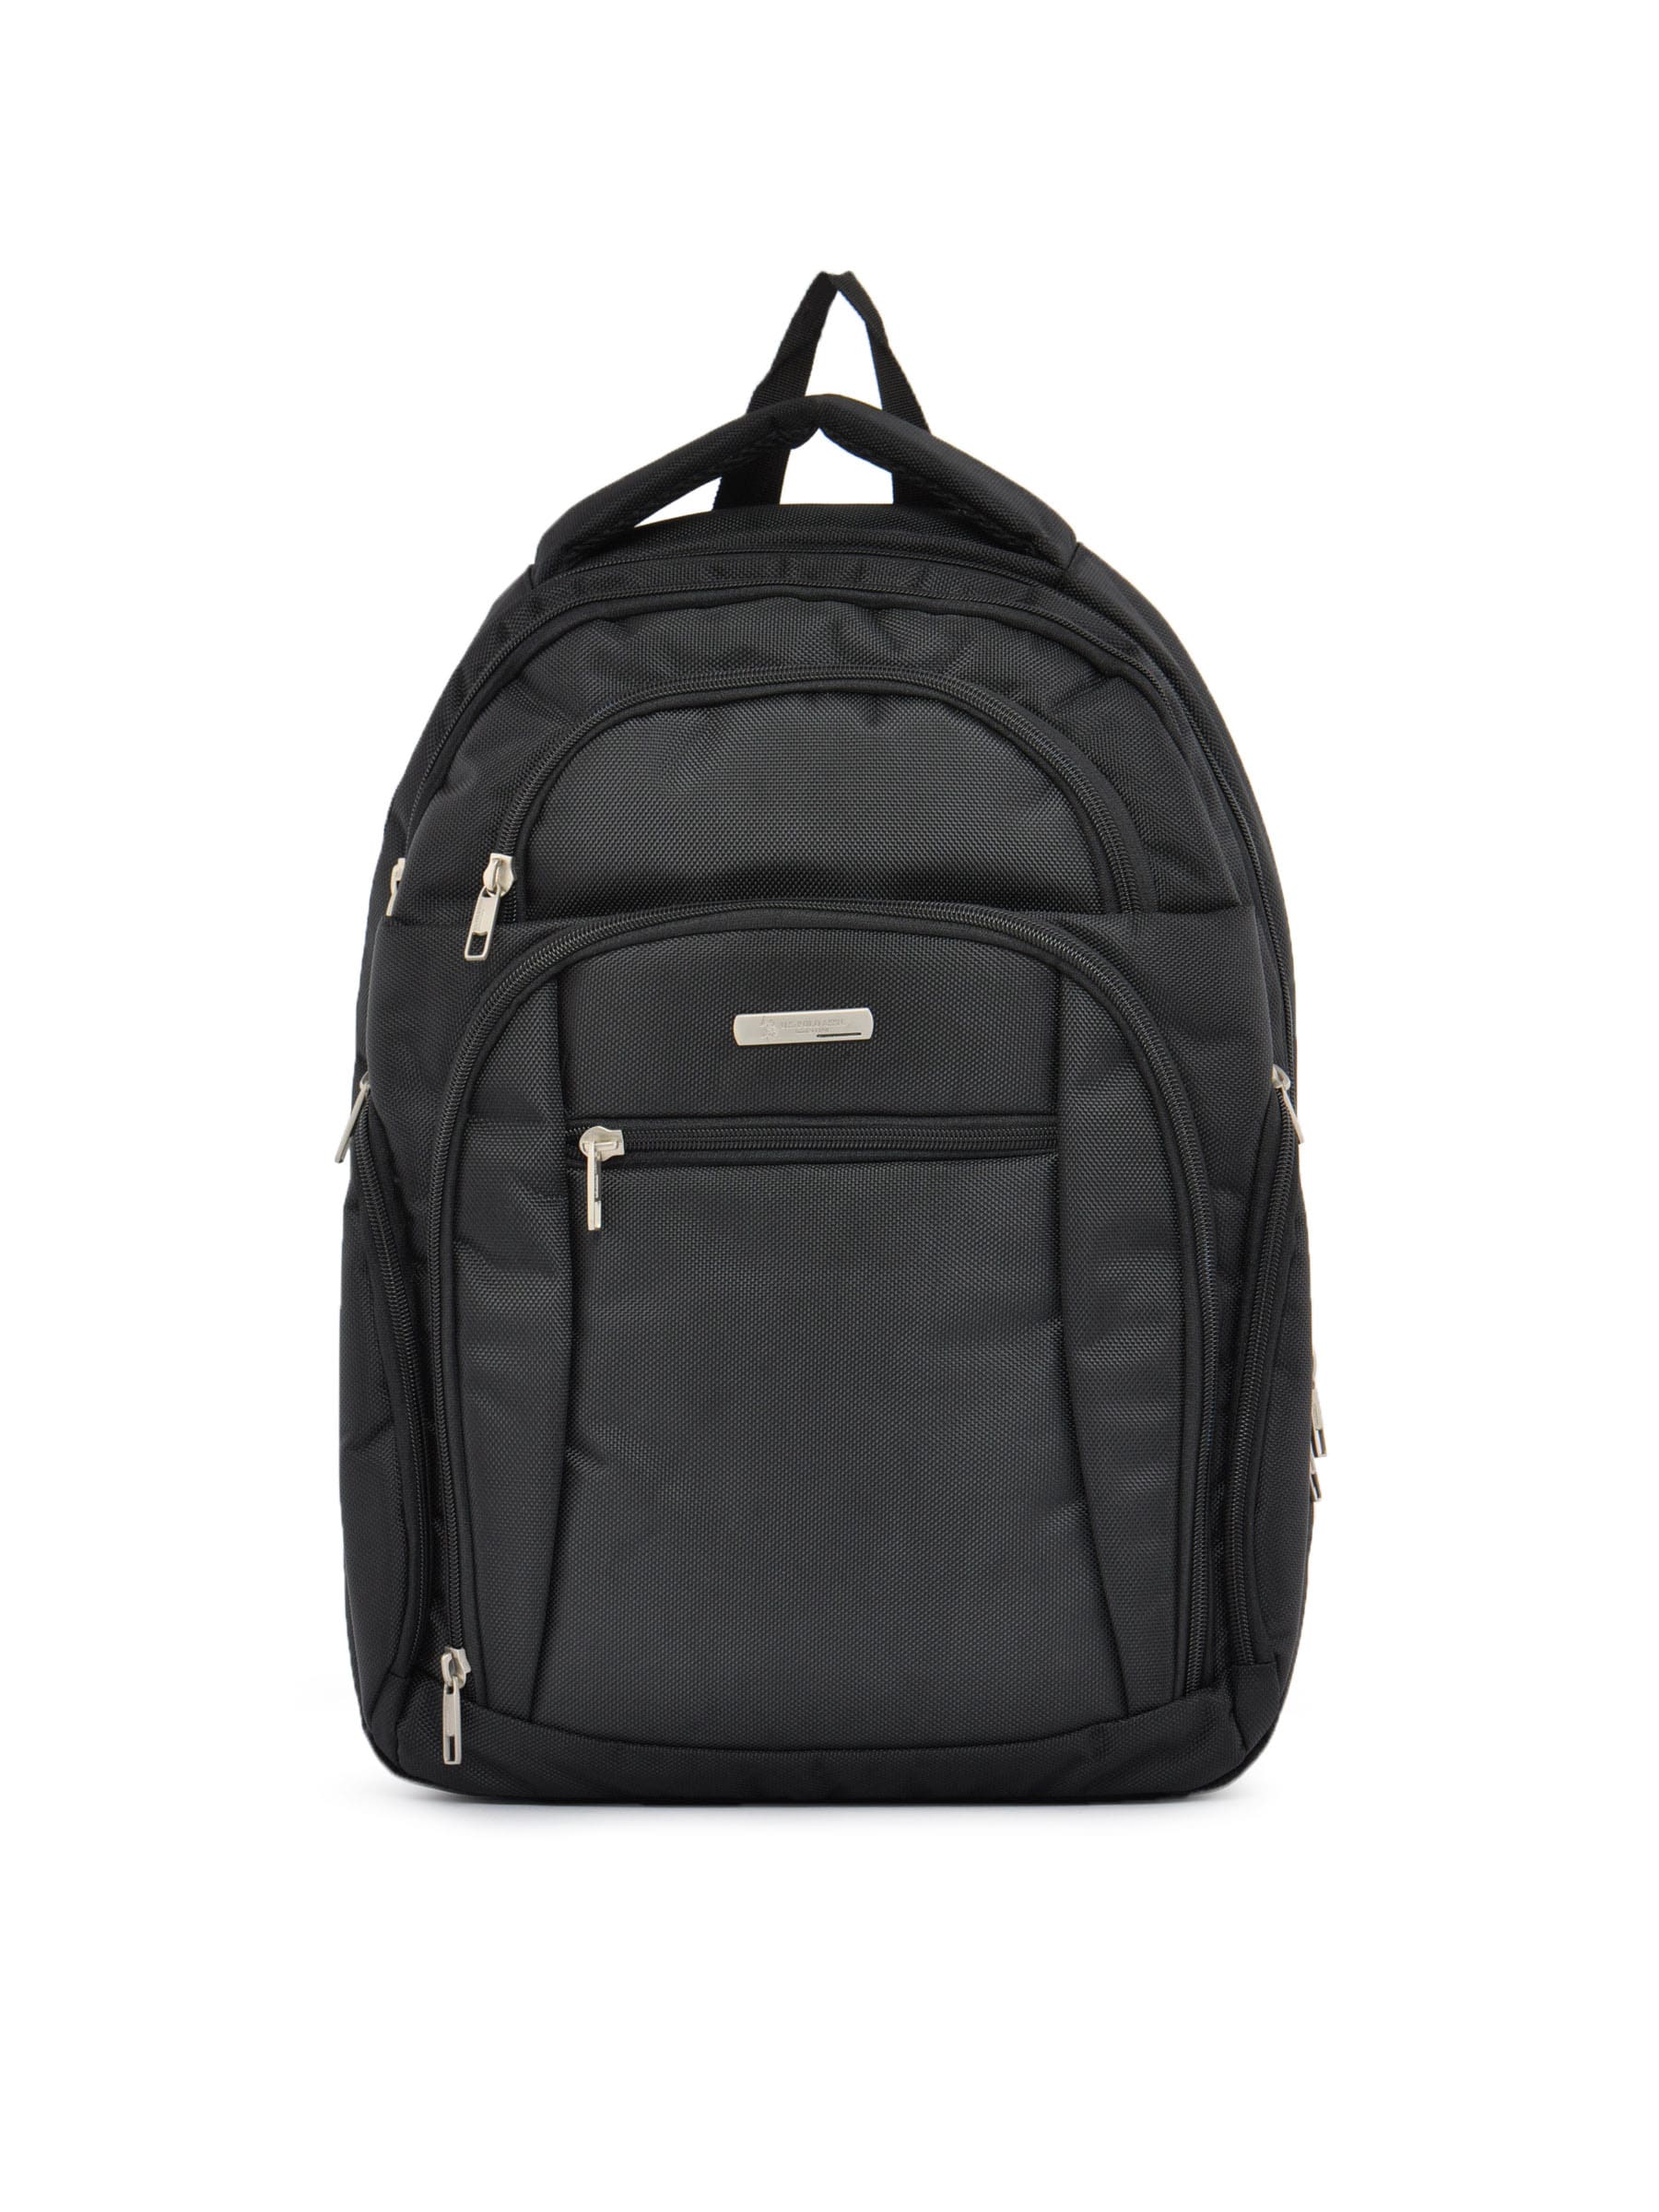 U.S. Polo Assn. Unisex Laptop Black Backpack